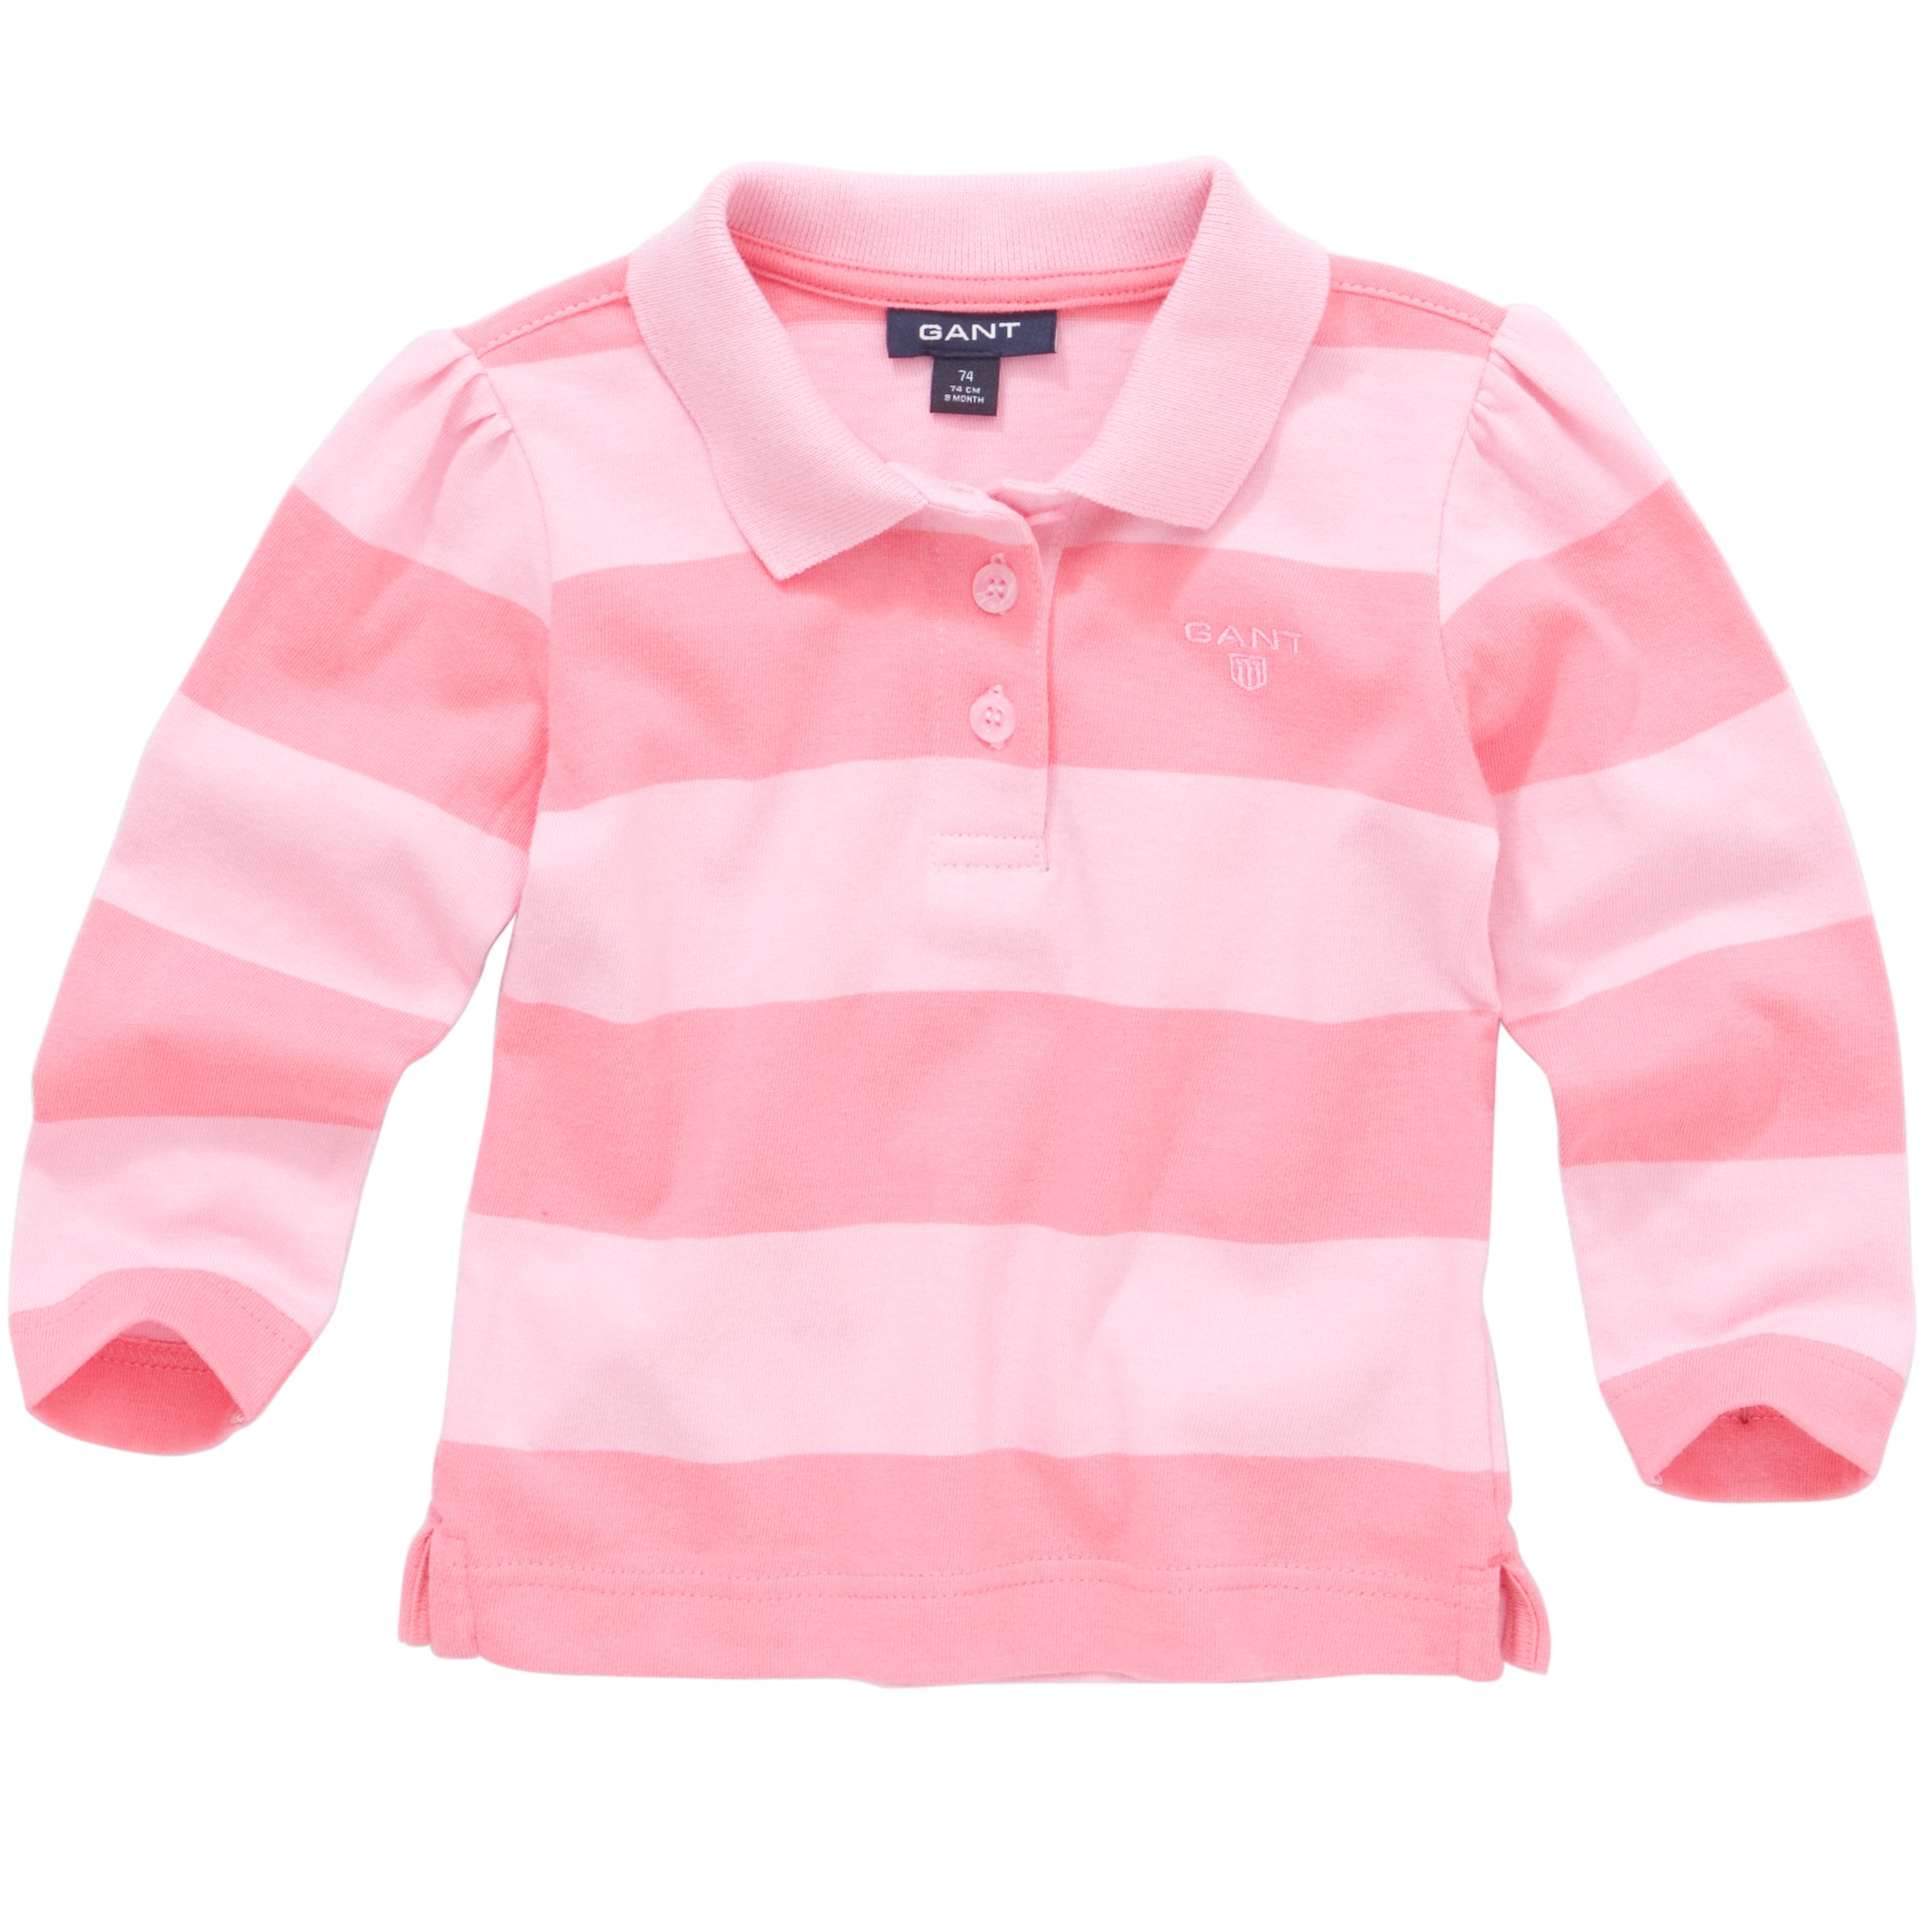 Gant Bold Stripe Long Sleeve Rugby Shirt, Pink